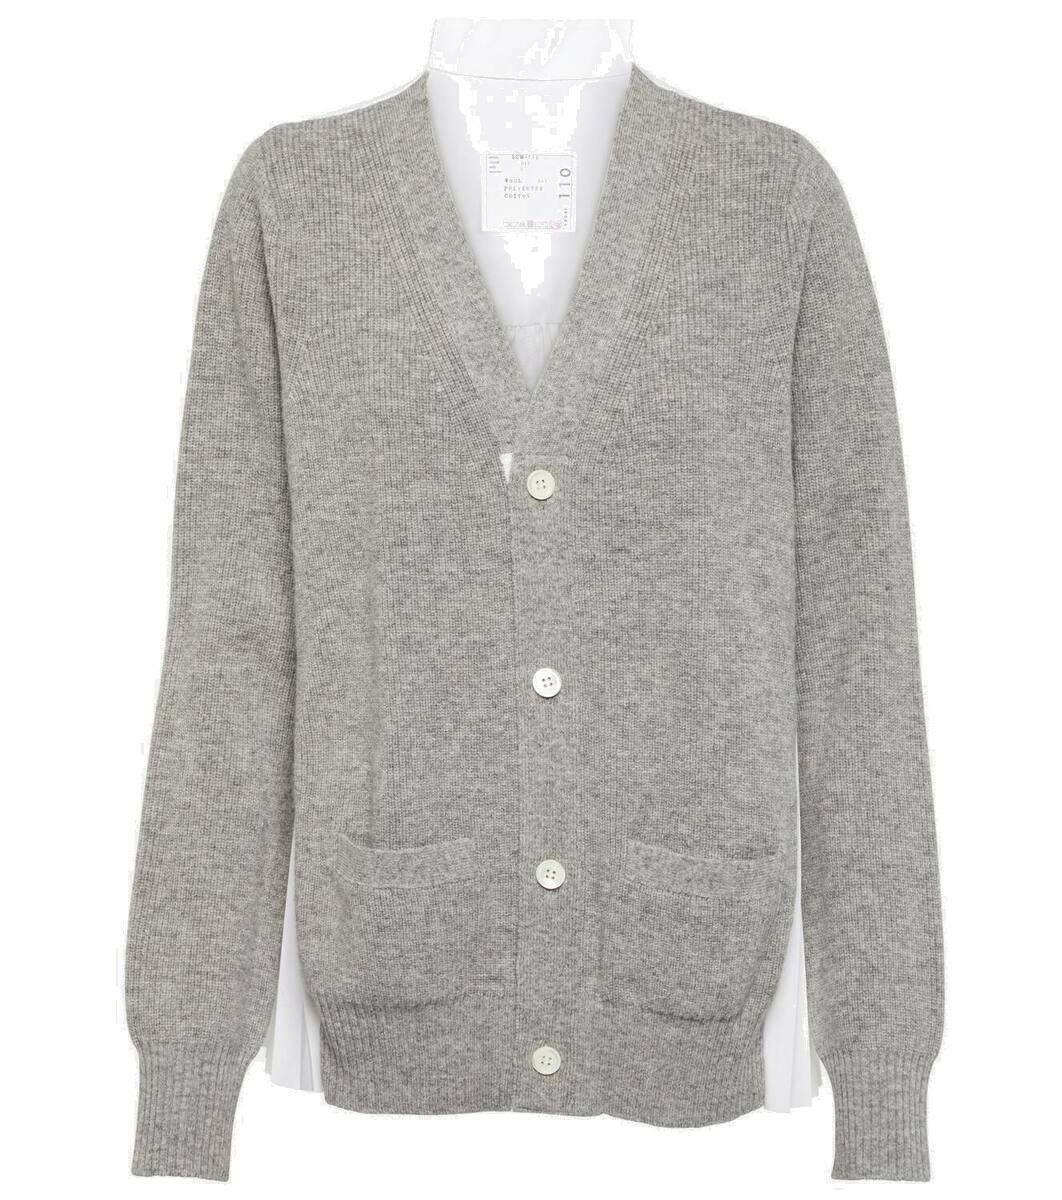 Sacai Grey and White Knit Wool Sweater Sacai